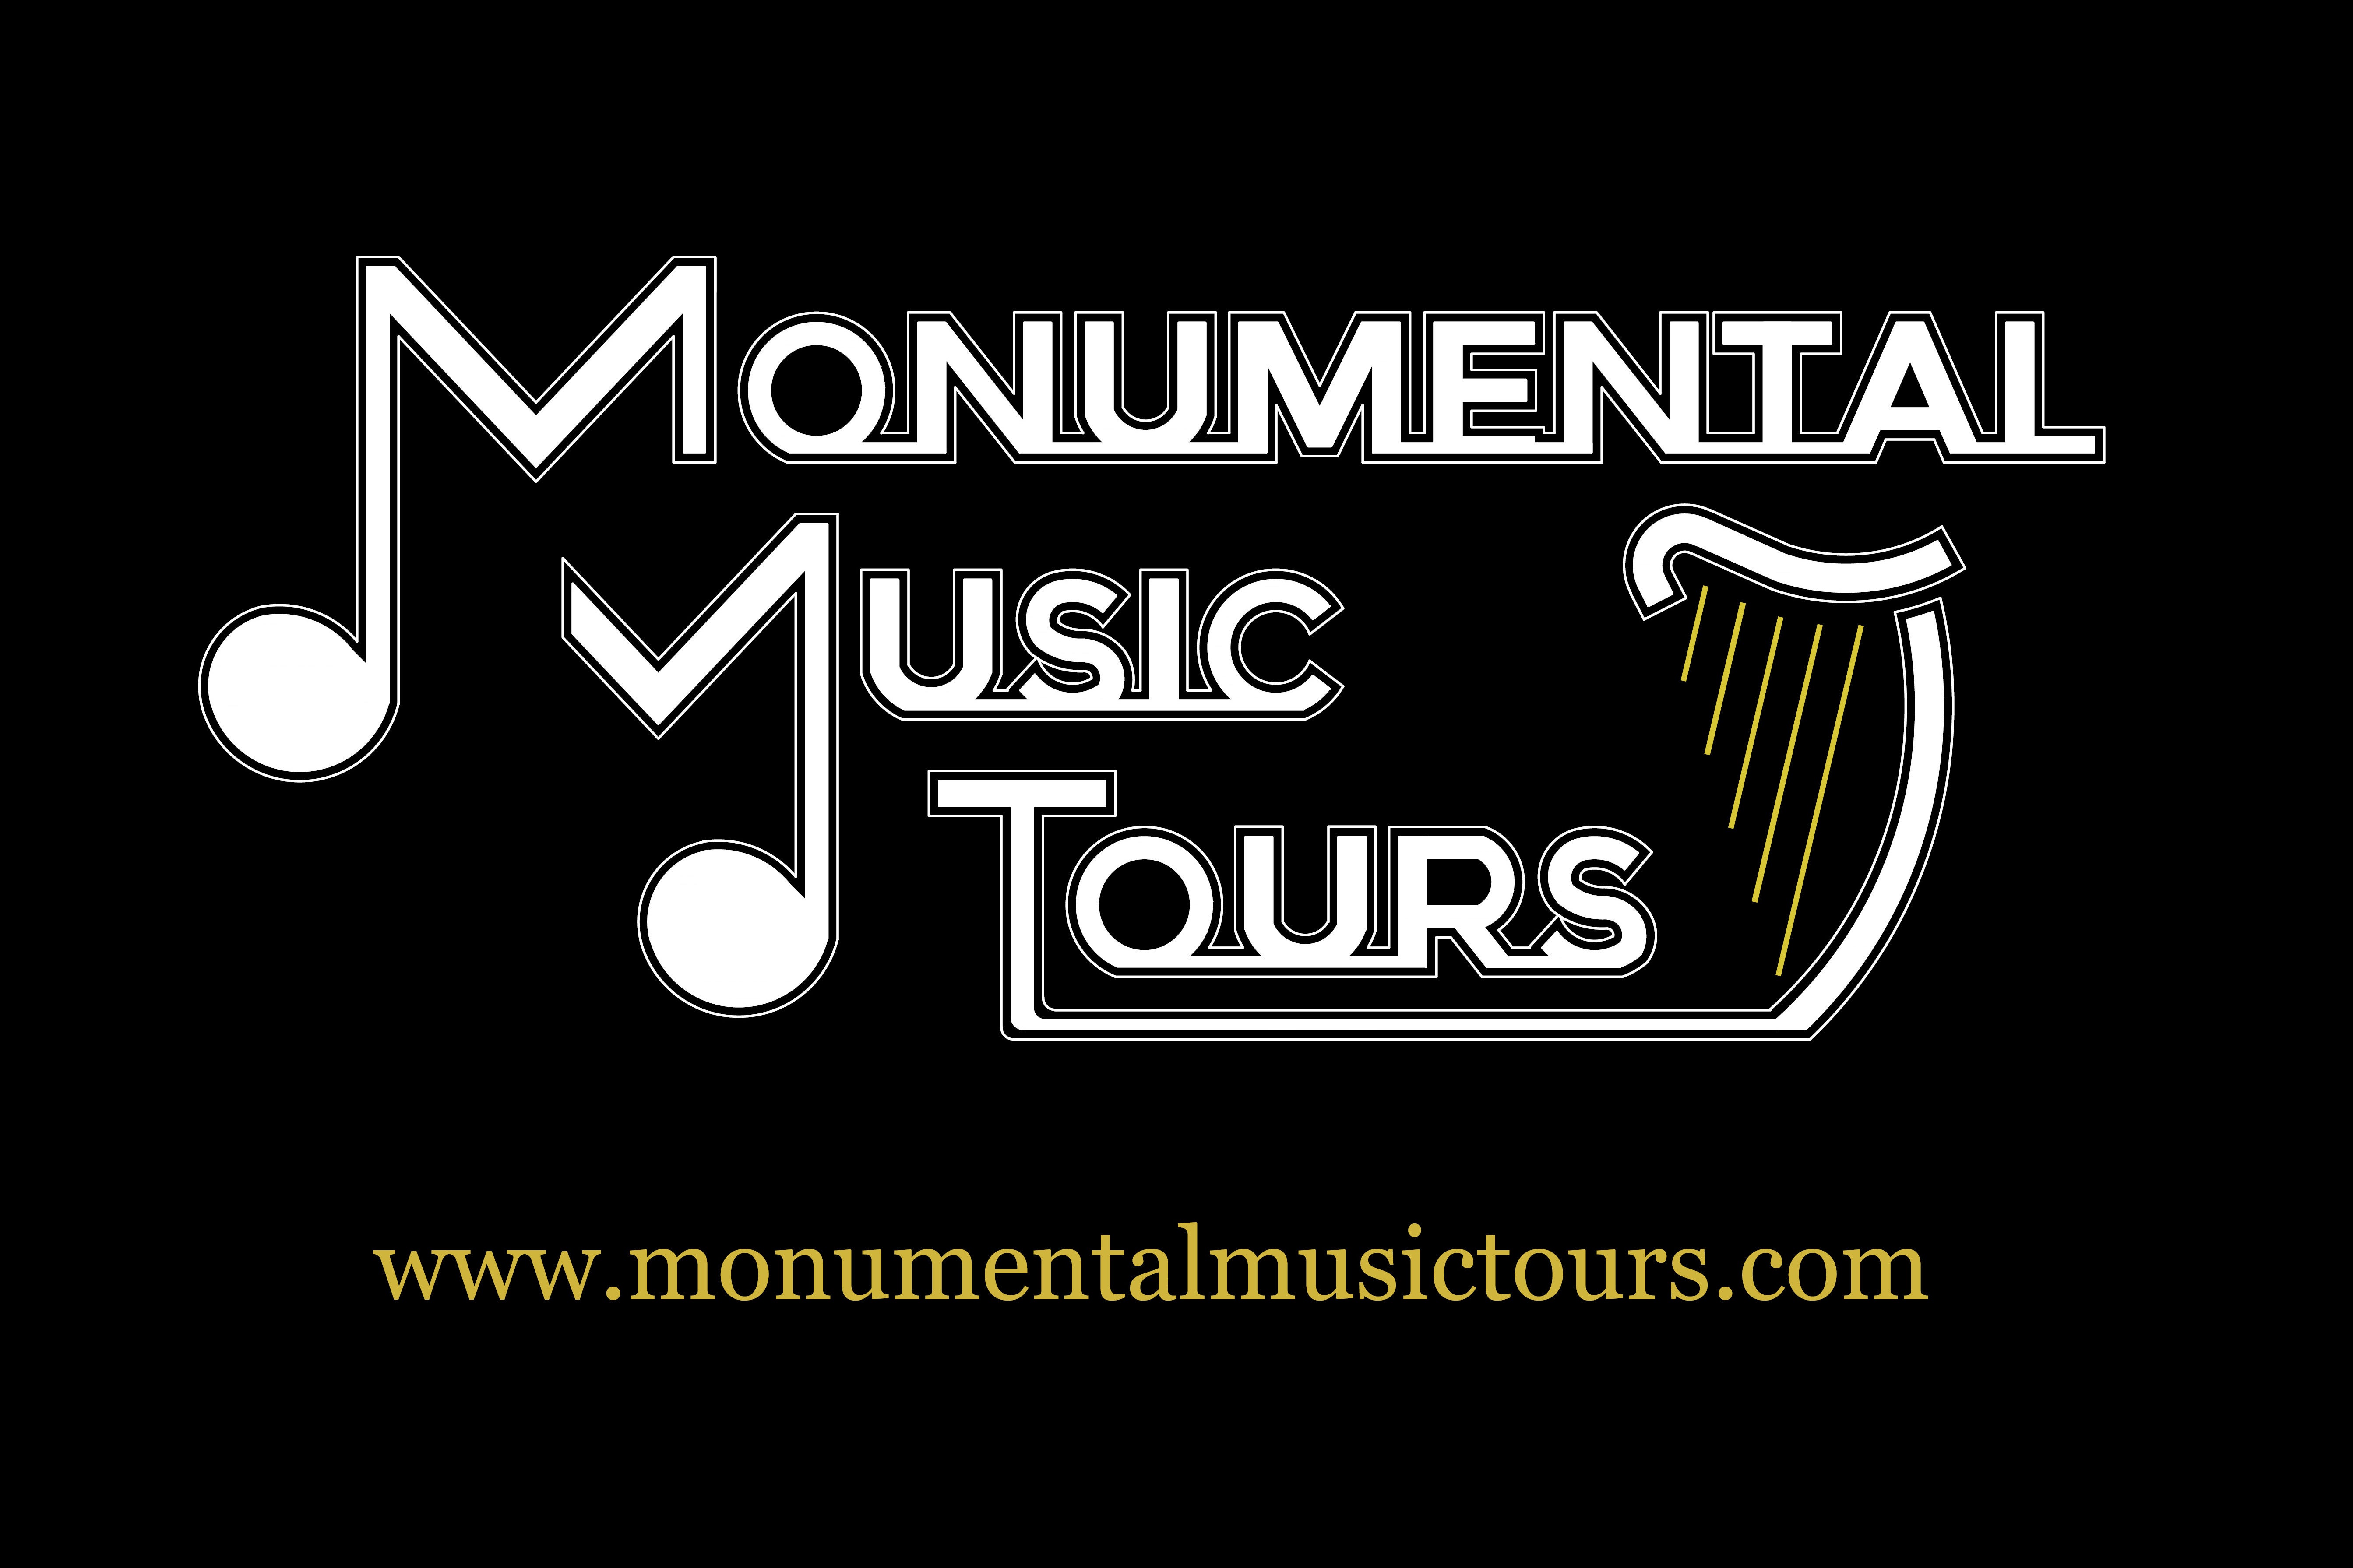 Monumental Music Tours logo